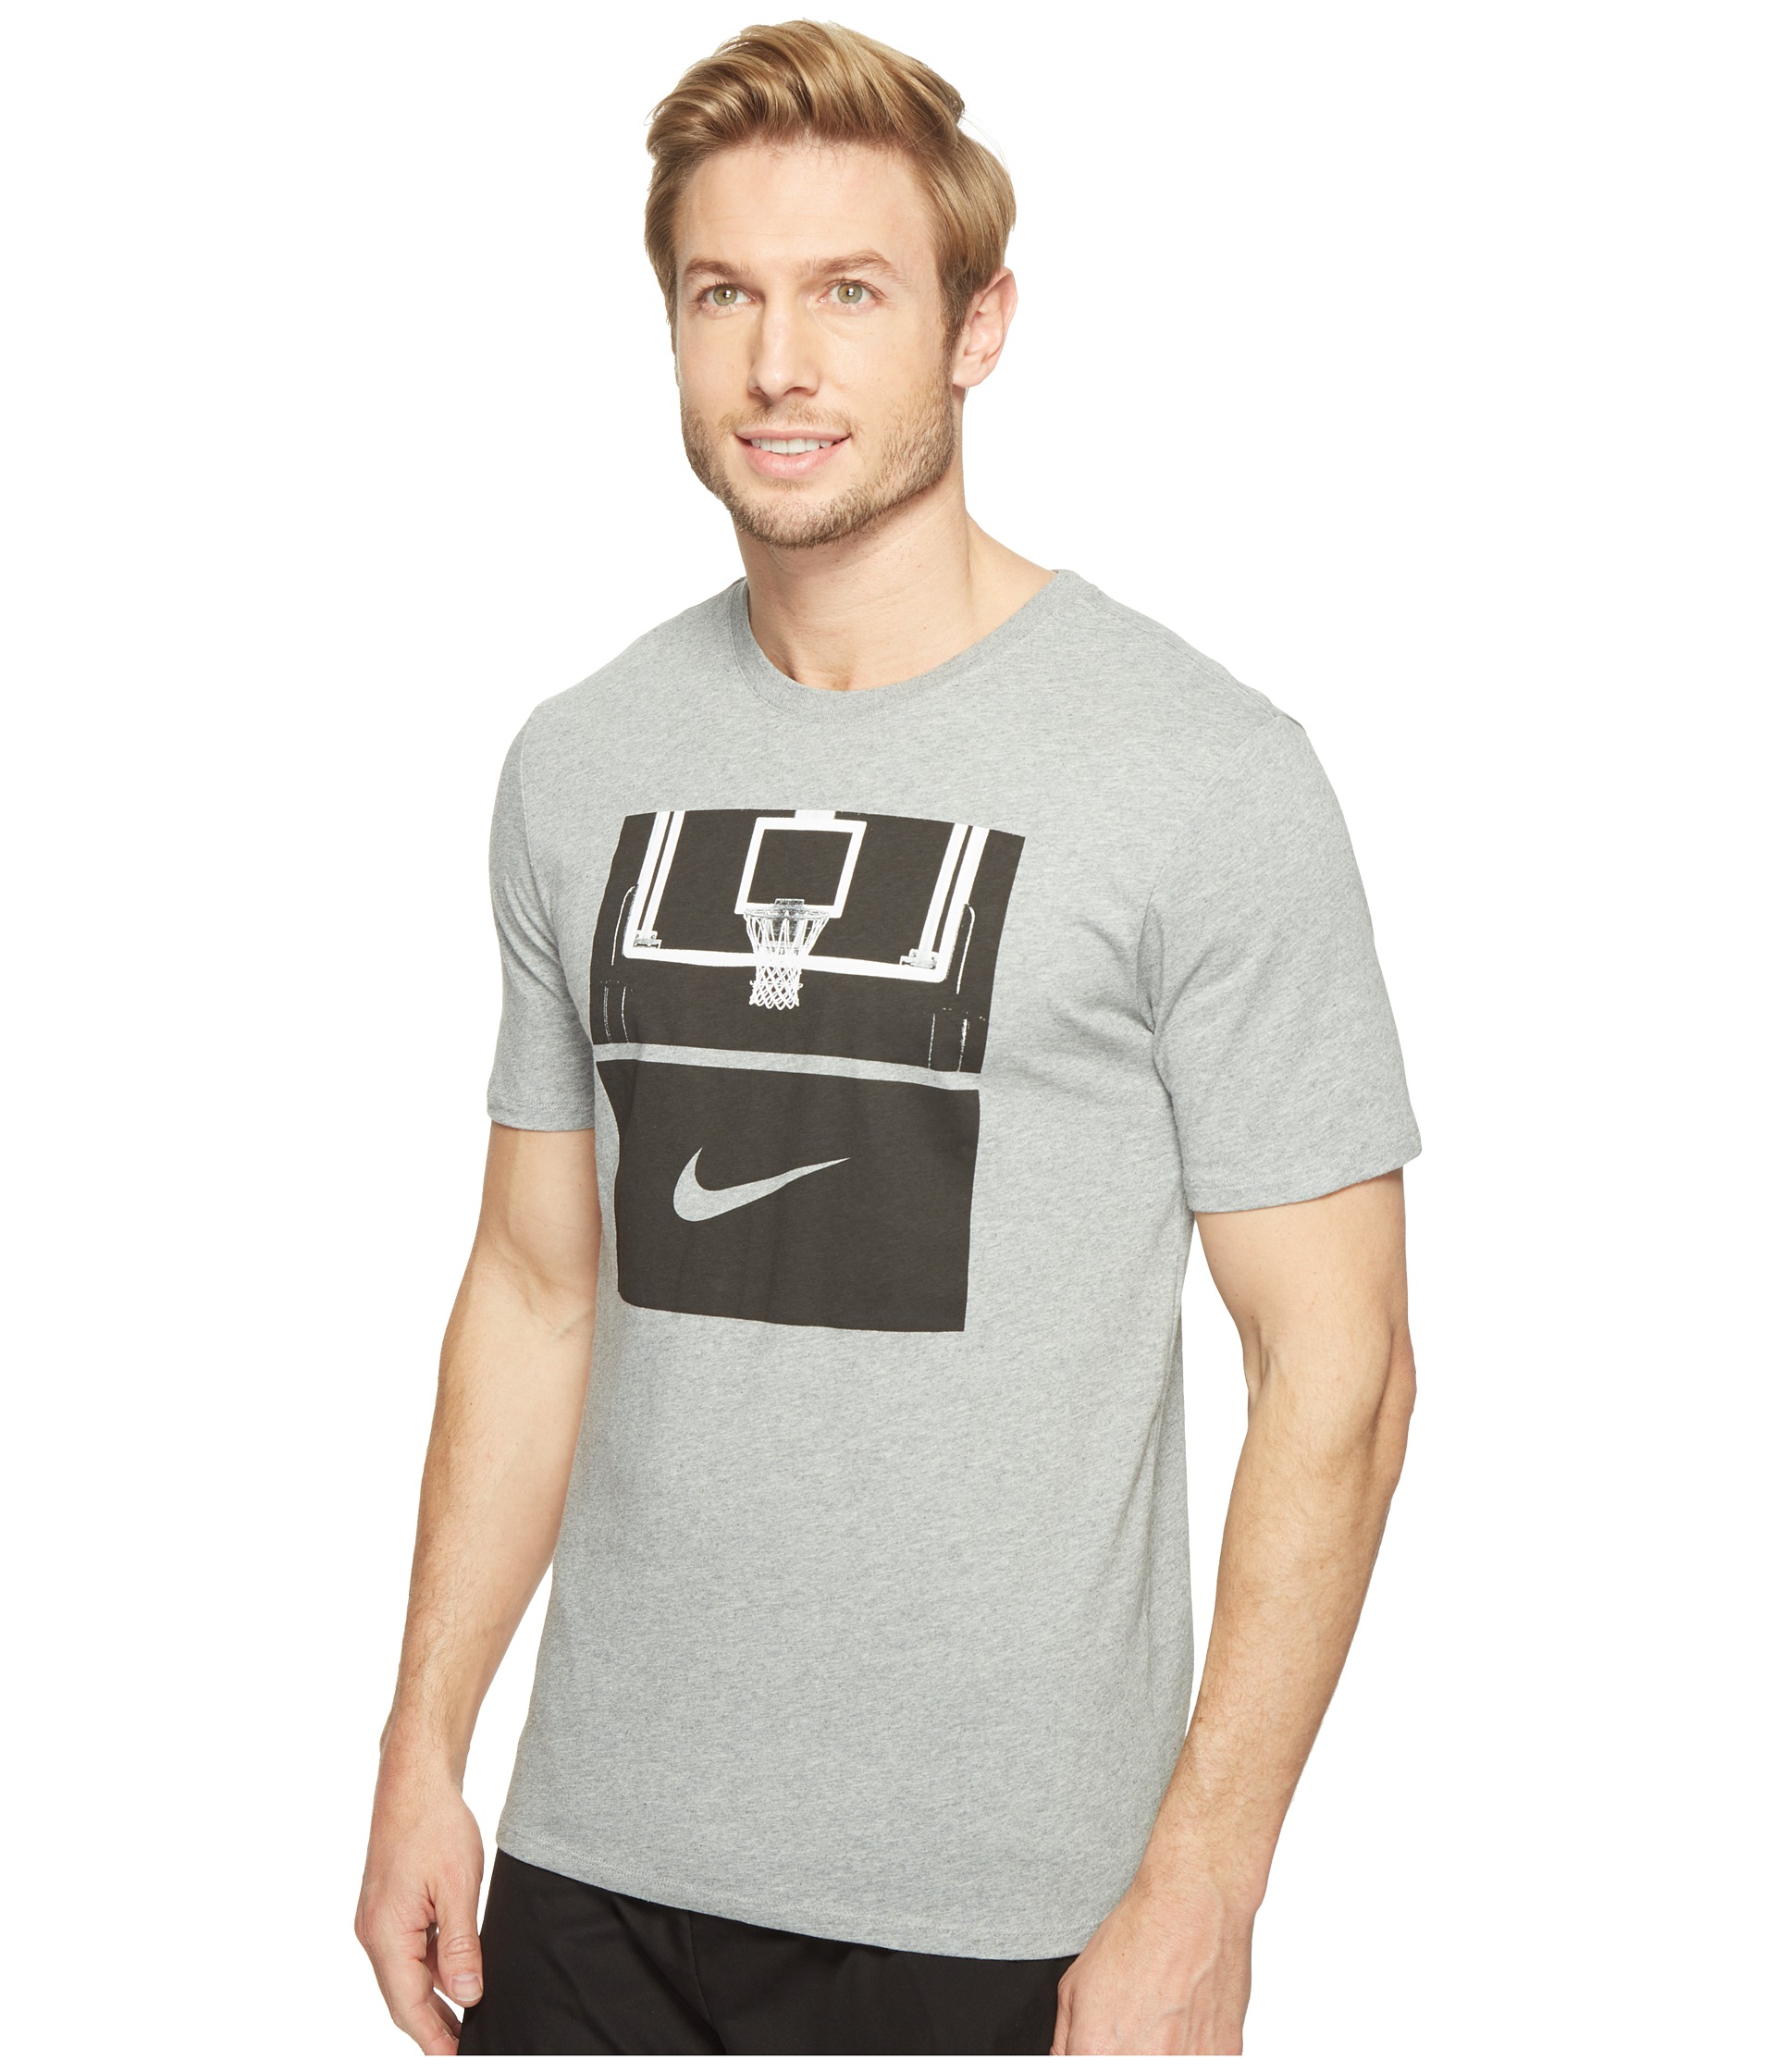 Nike Dry Basketball Hoop T-Shirt - Zappos.com Free Shipping BOTH Ways